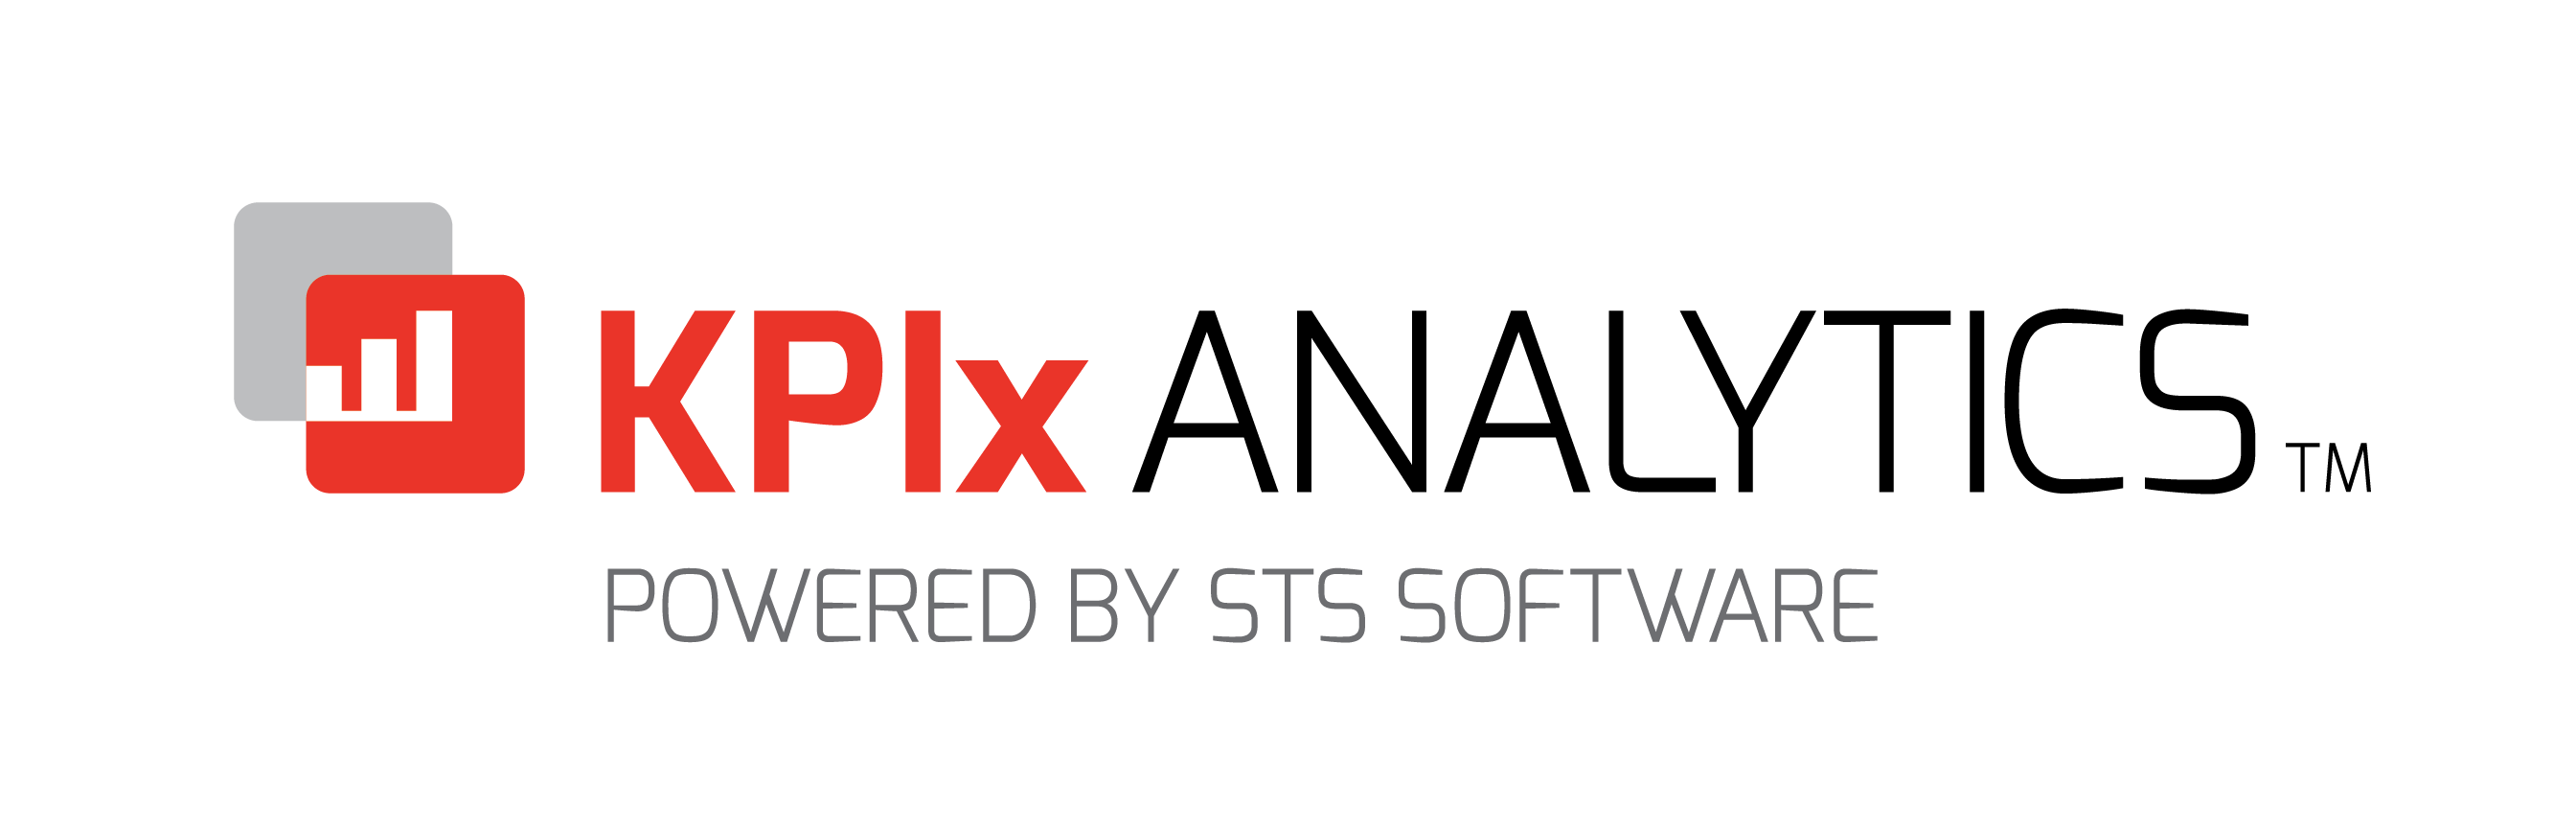 Logo KPIx Analytics Powered by STS